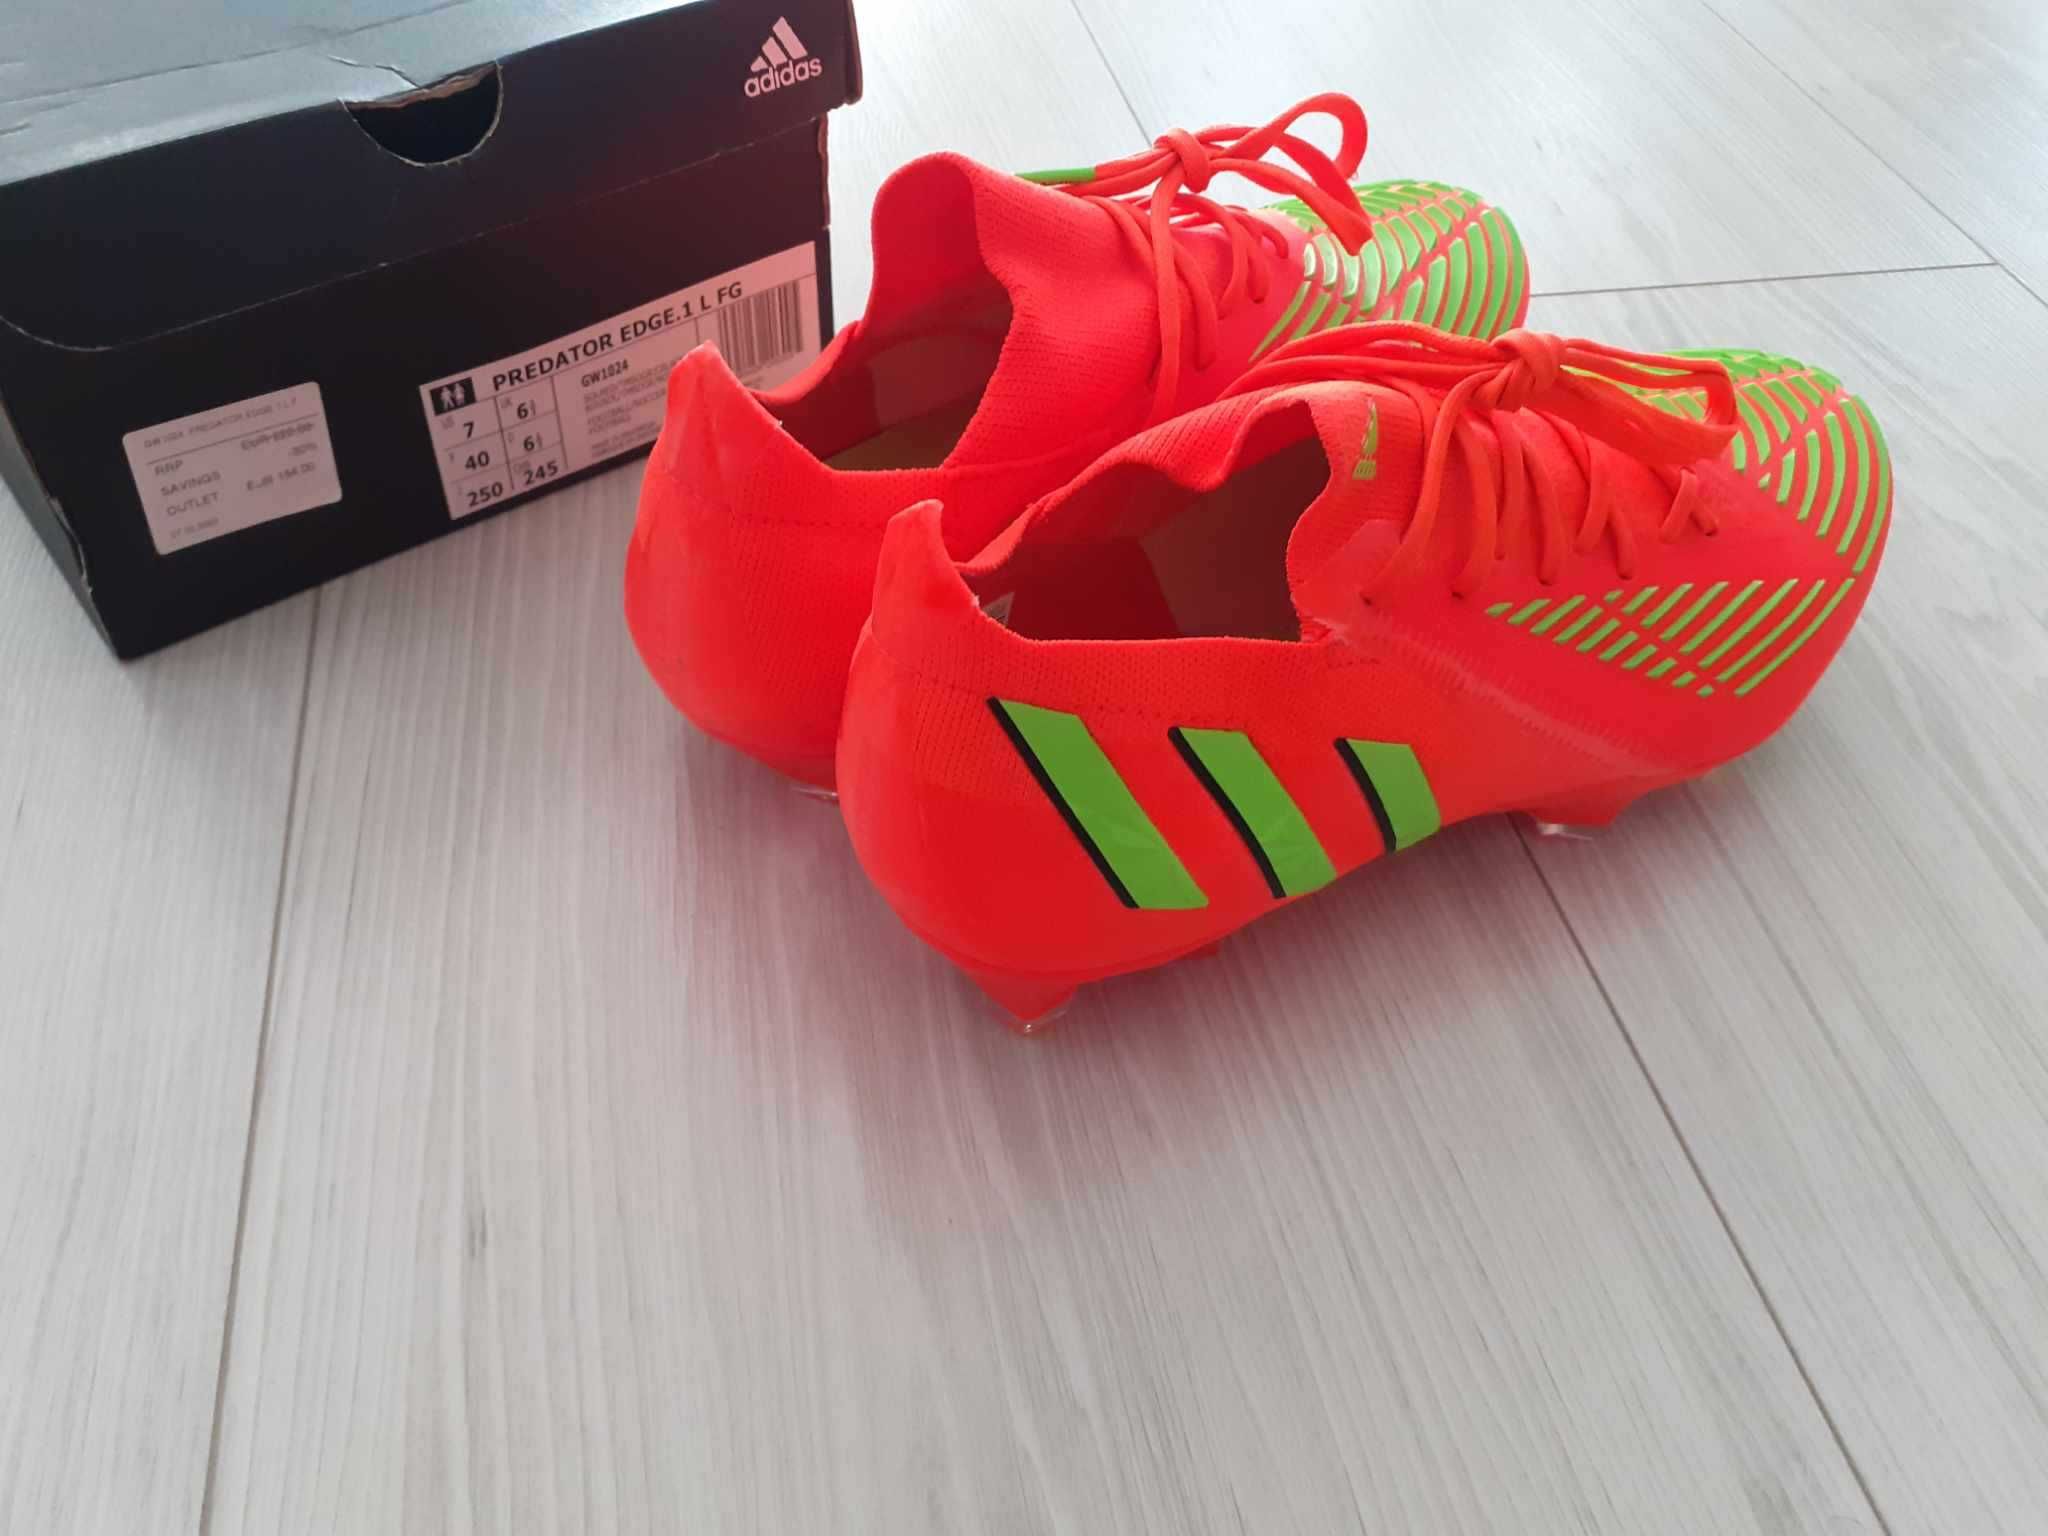 Profesjonalne buty piłkarskie korki Adidas Predator EDGE.1 L FG r. 40